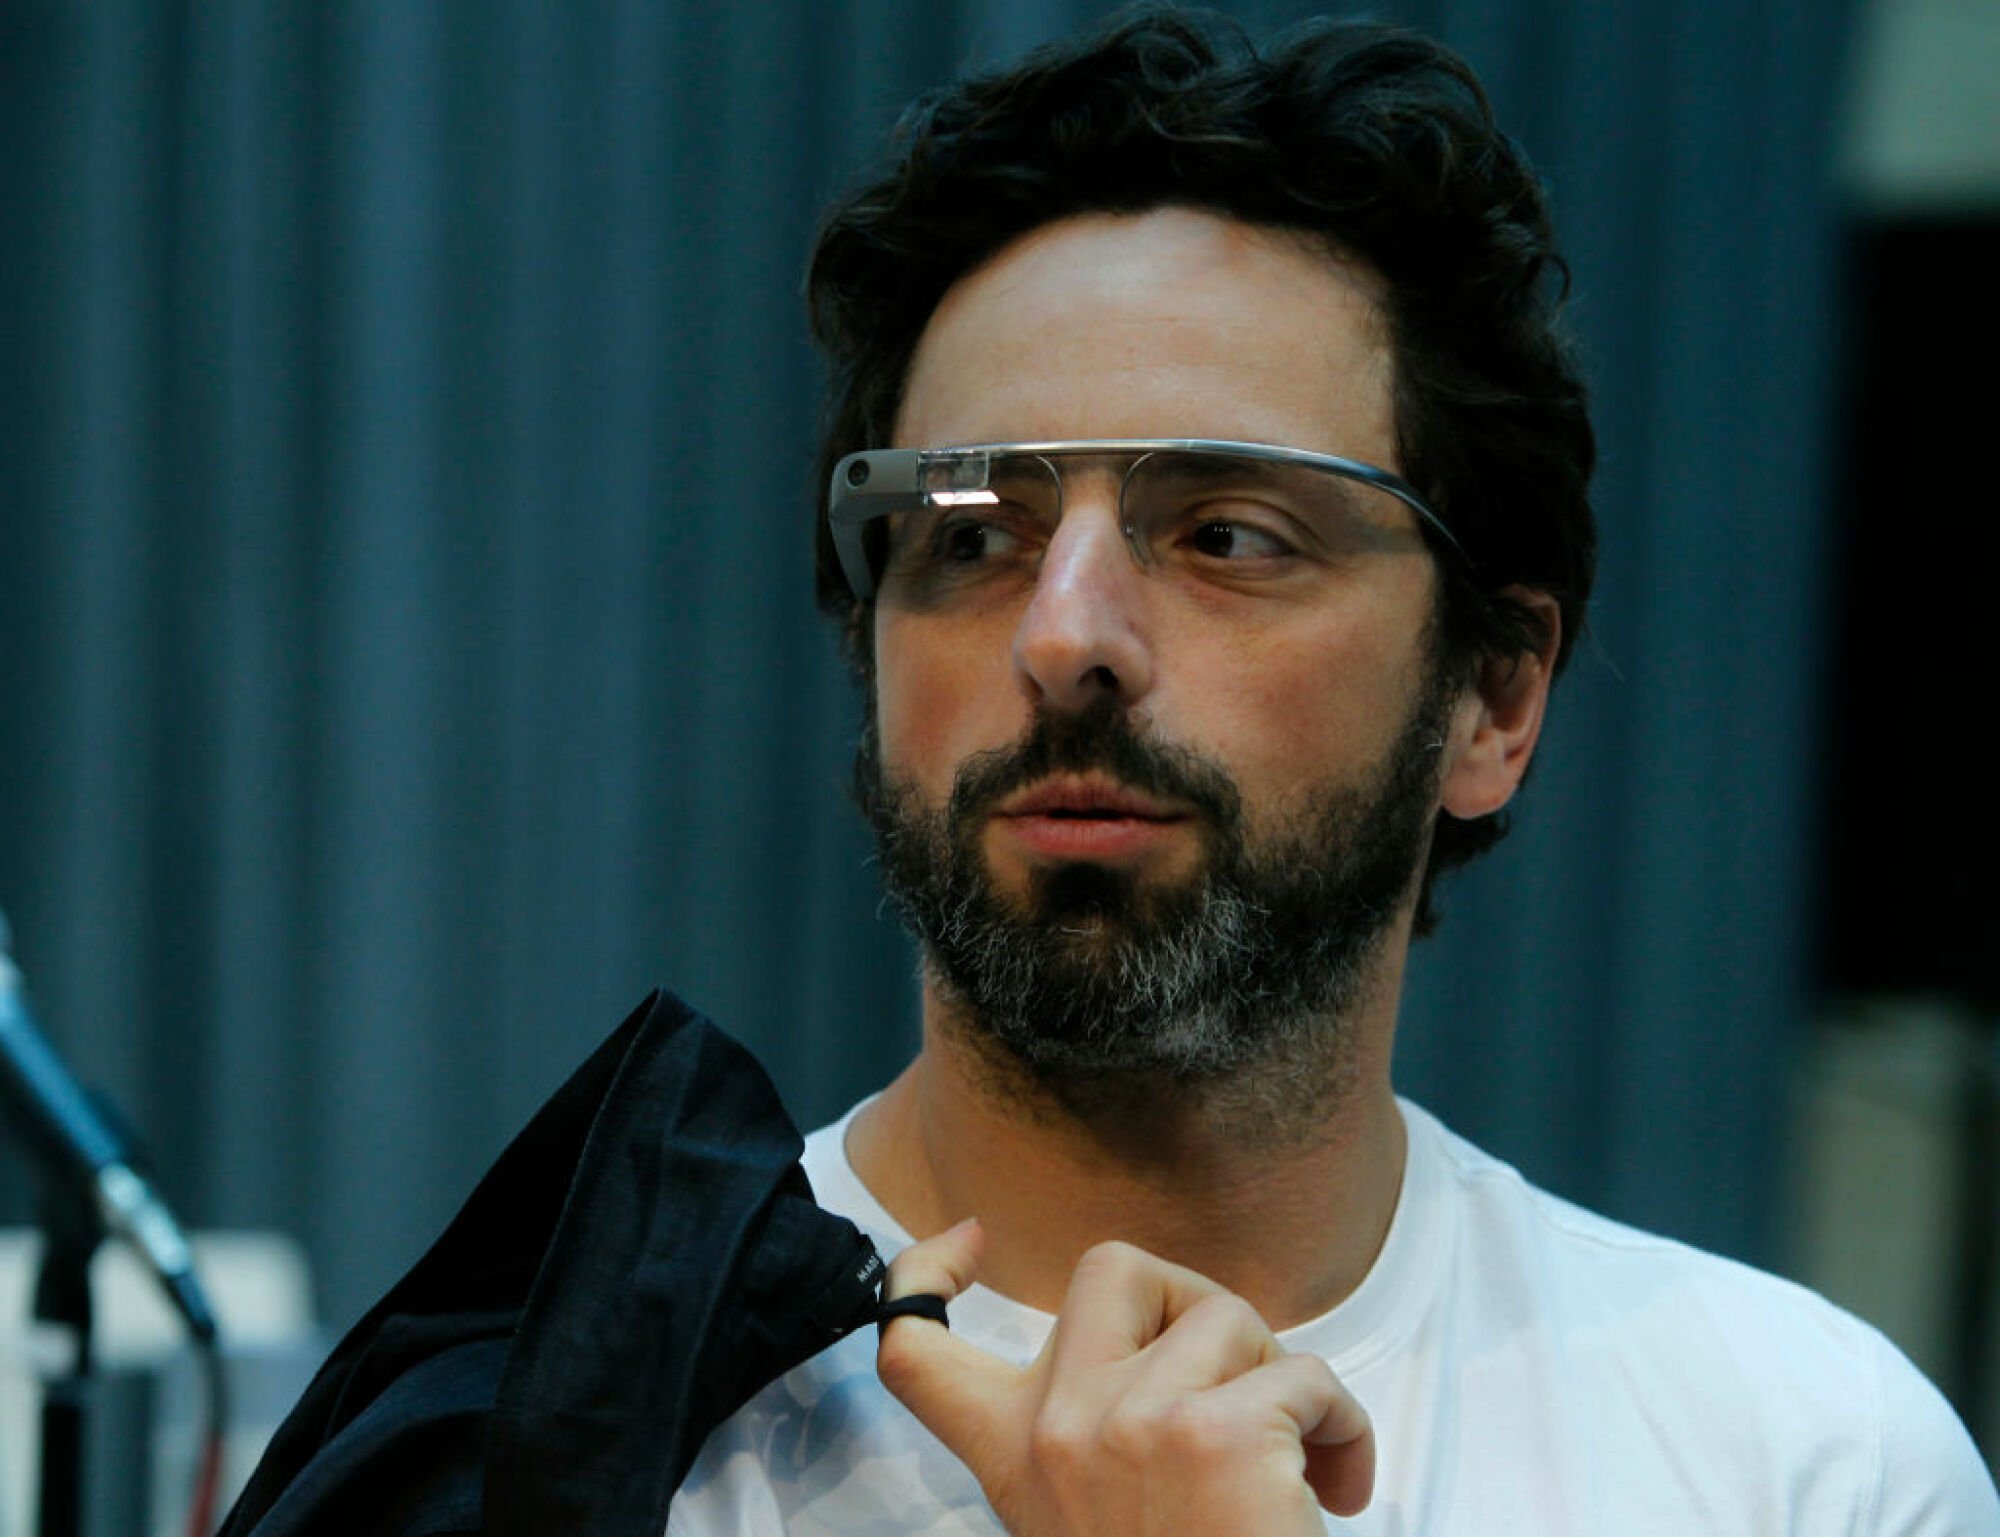 Google co-founder Sergey Brin wearing the Google Glass